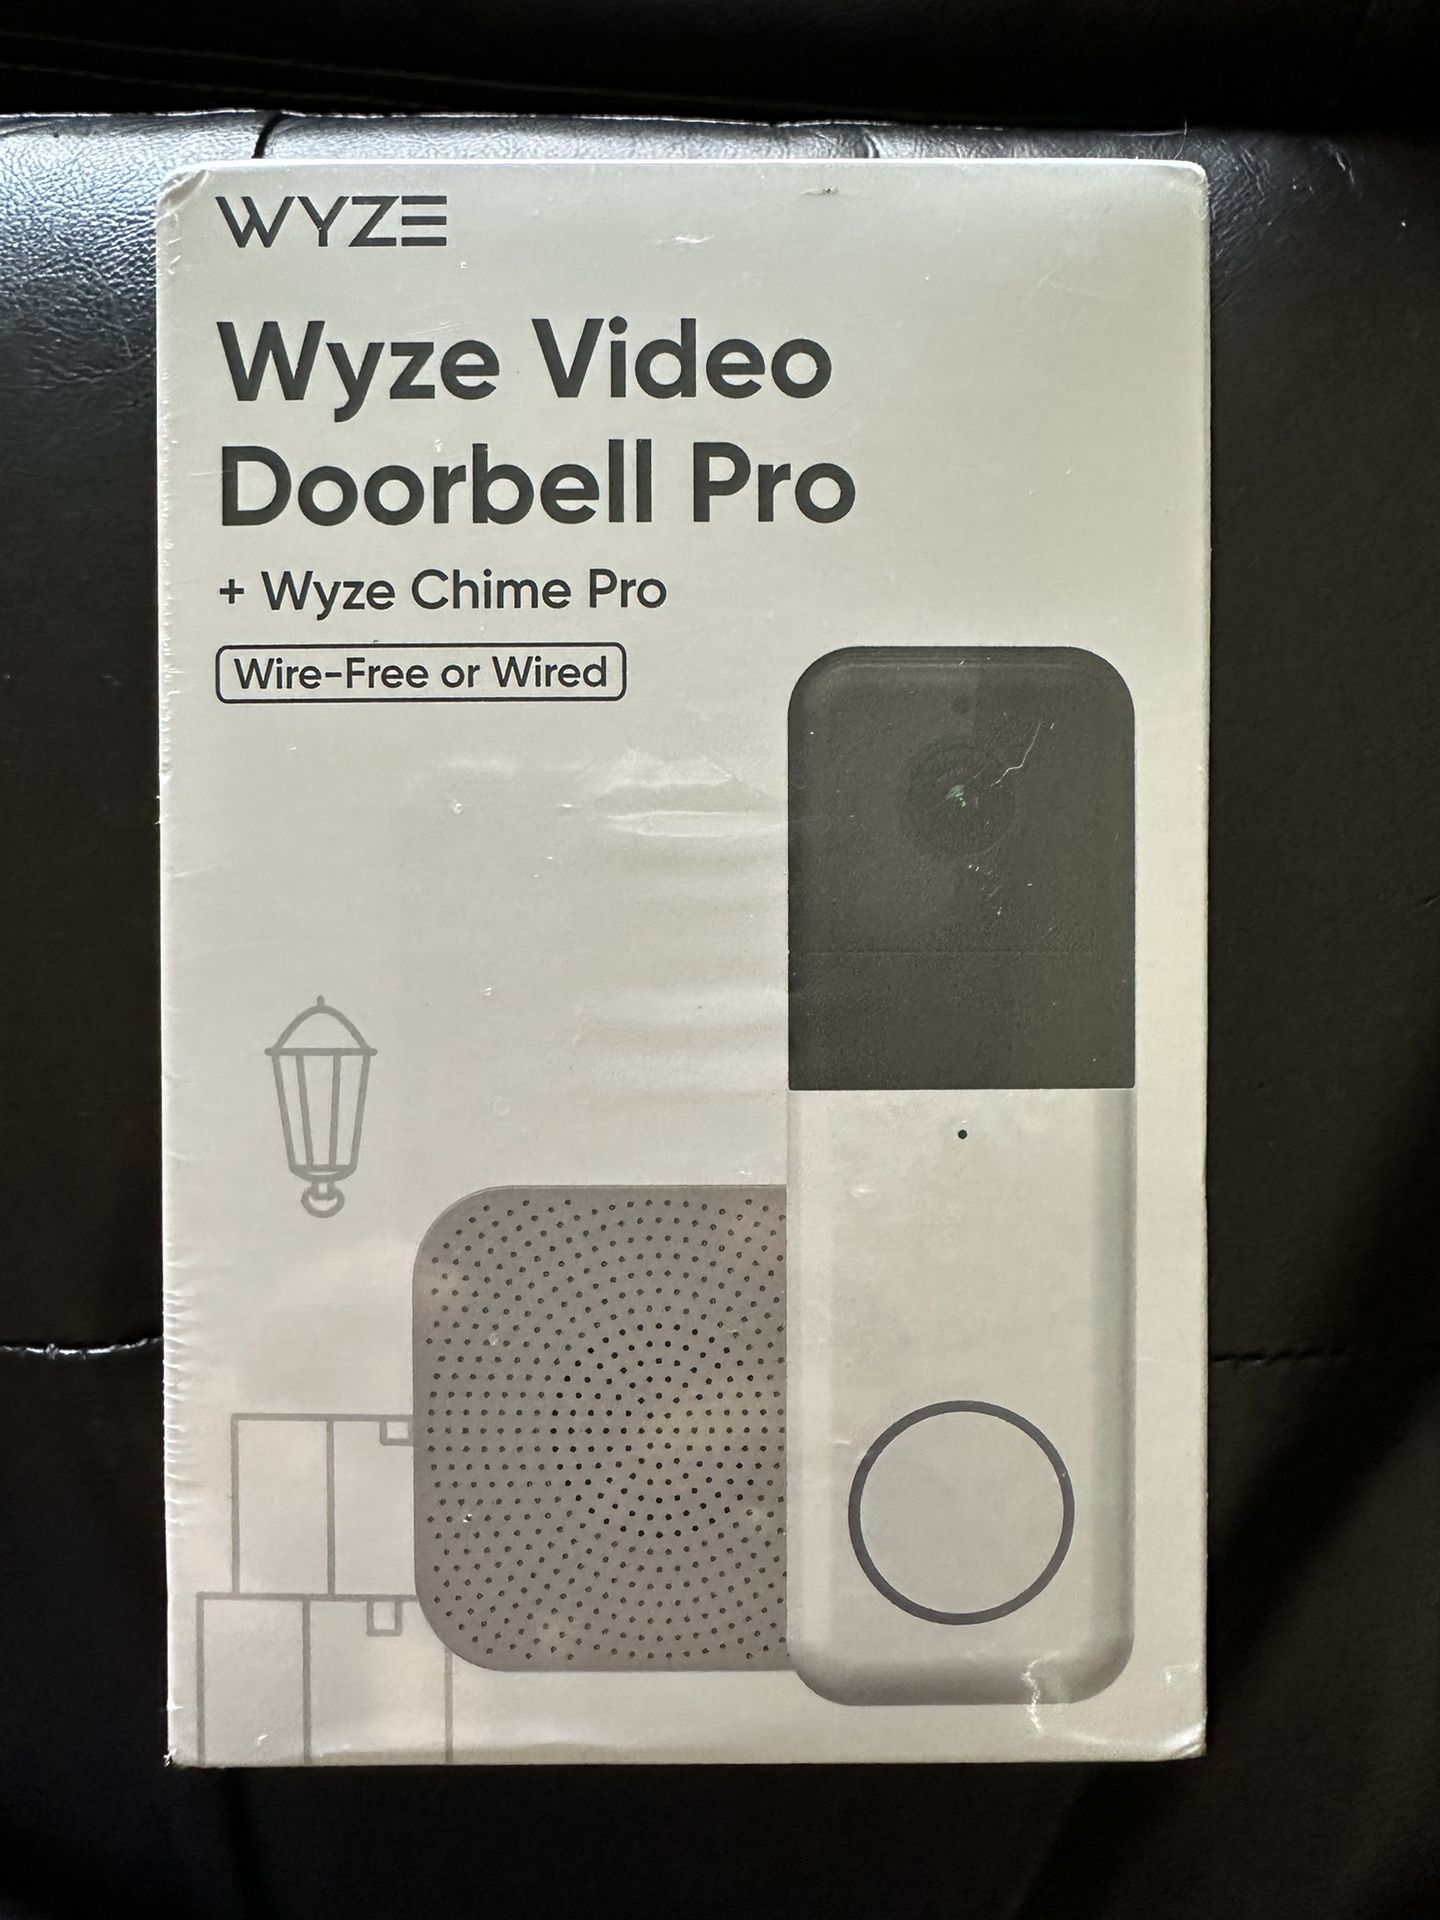 NEW! Wireless Video Doorbell Camera Pro W/ Chime Pro